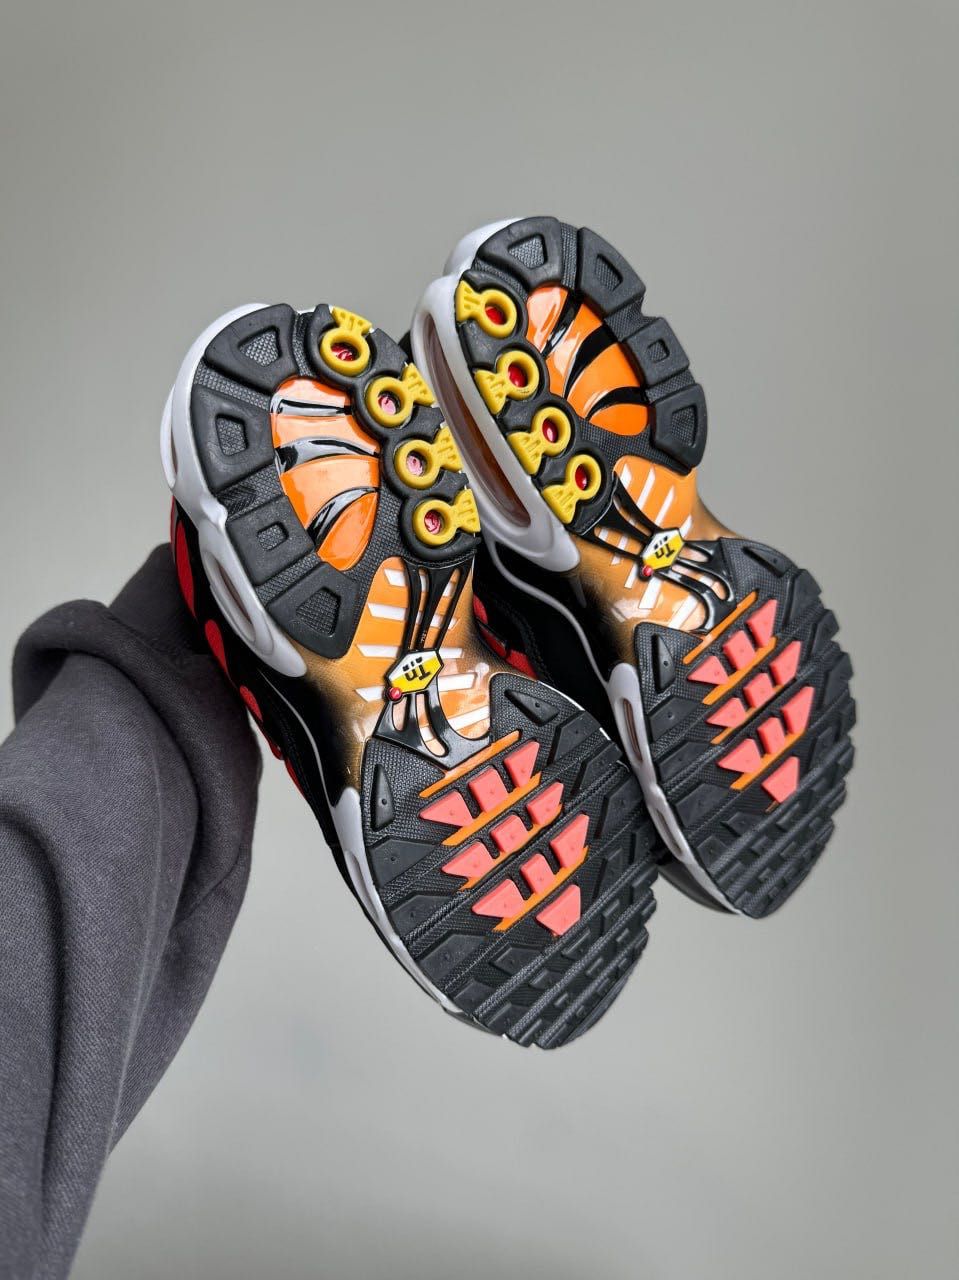 Мужские кроссовки Nike Air Max TN Plus Black/Orange. Размеры 40-45